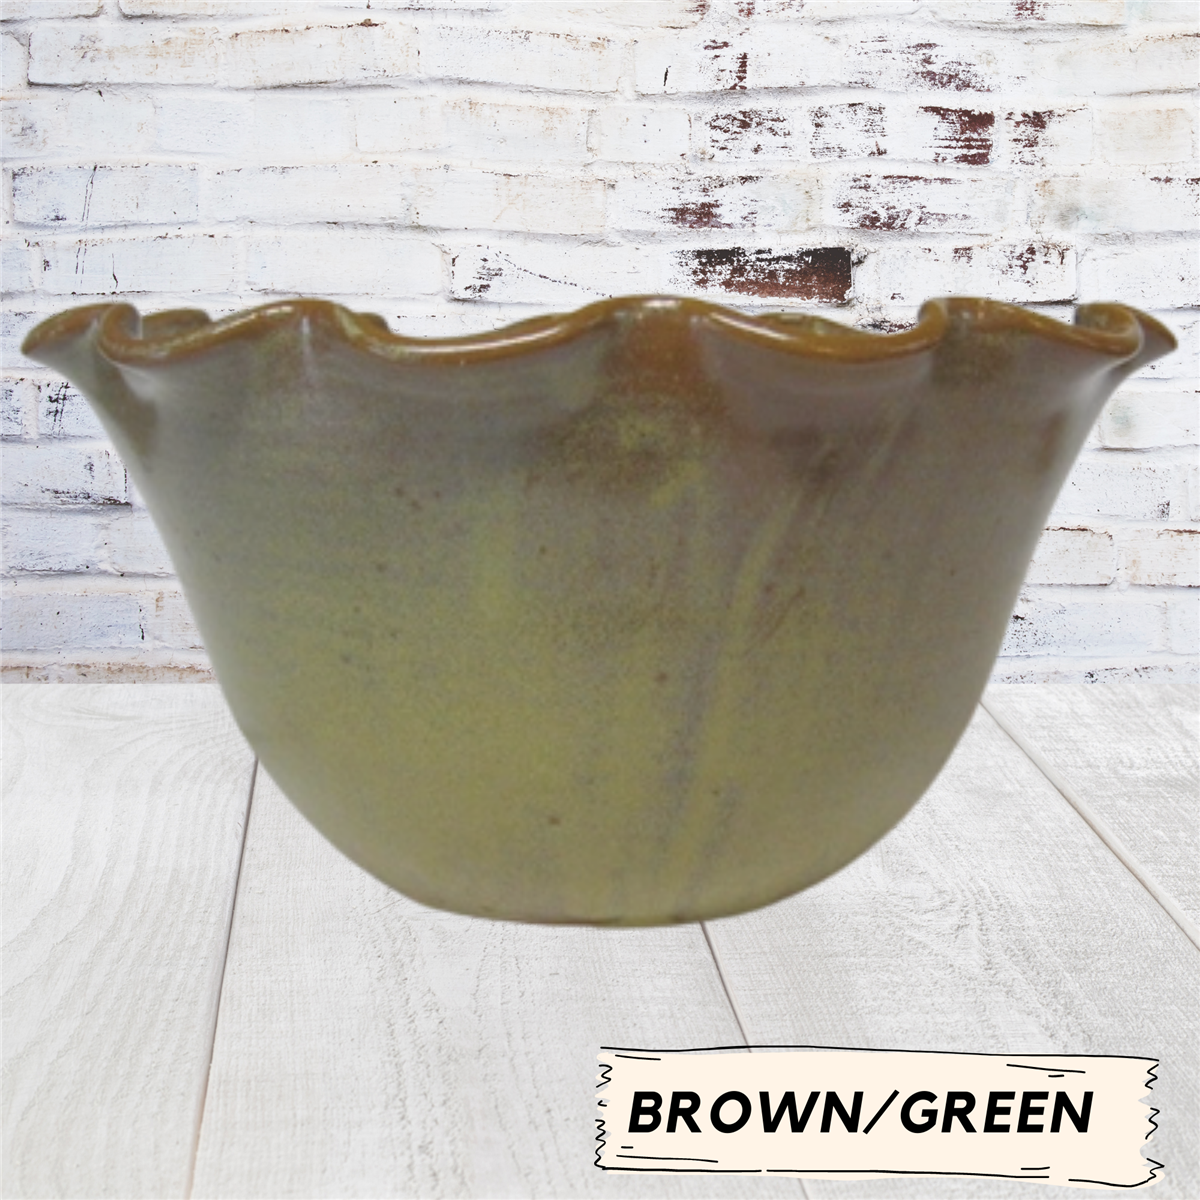 Pottery serving bowl for salads or vegatables. Large ceramic dish